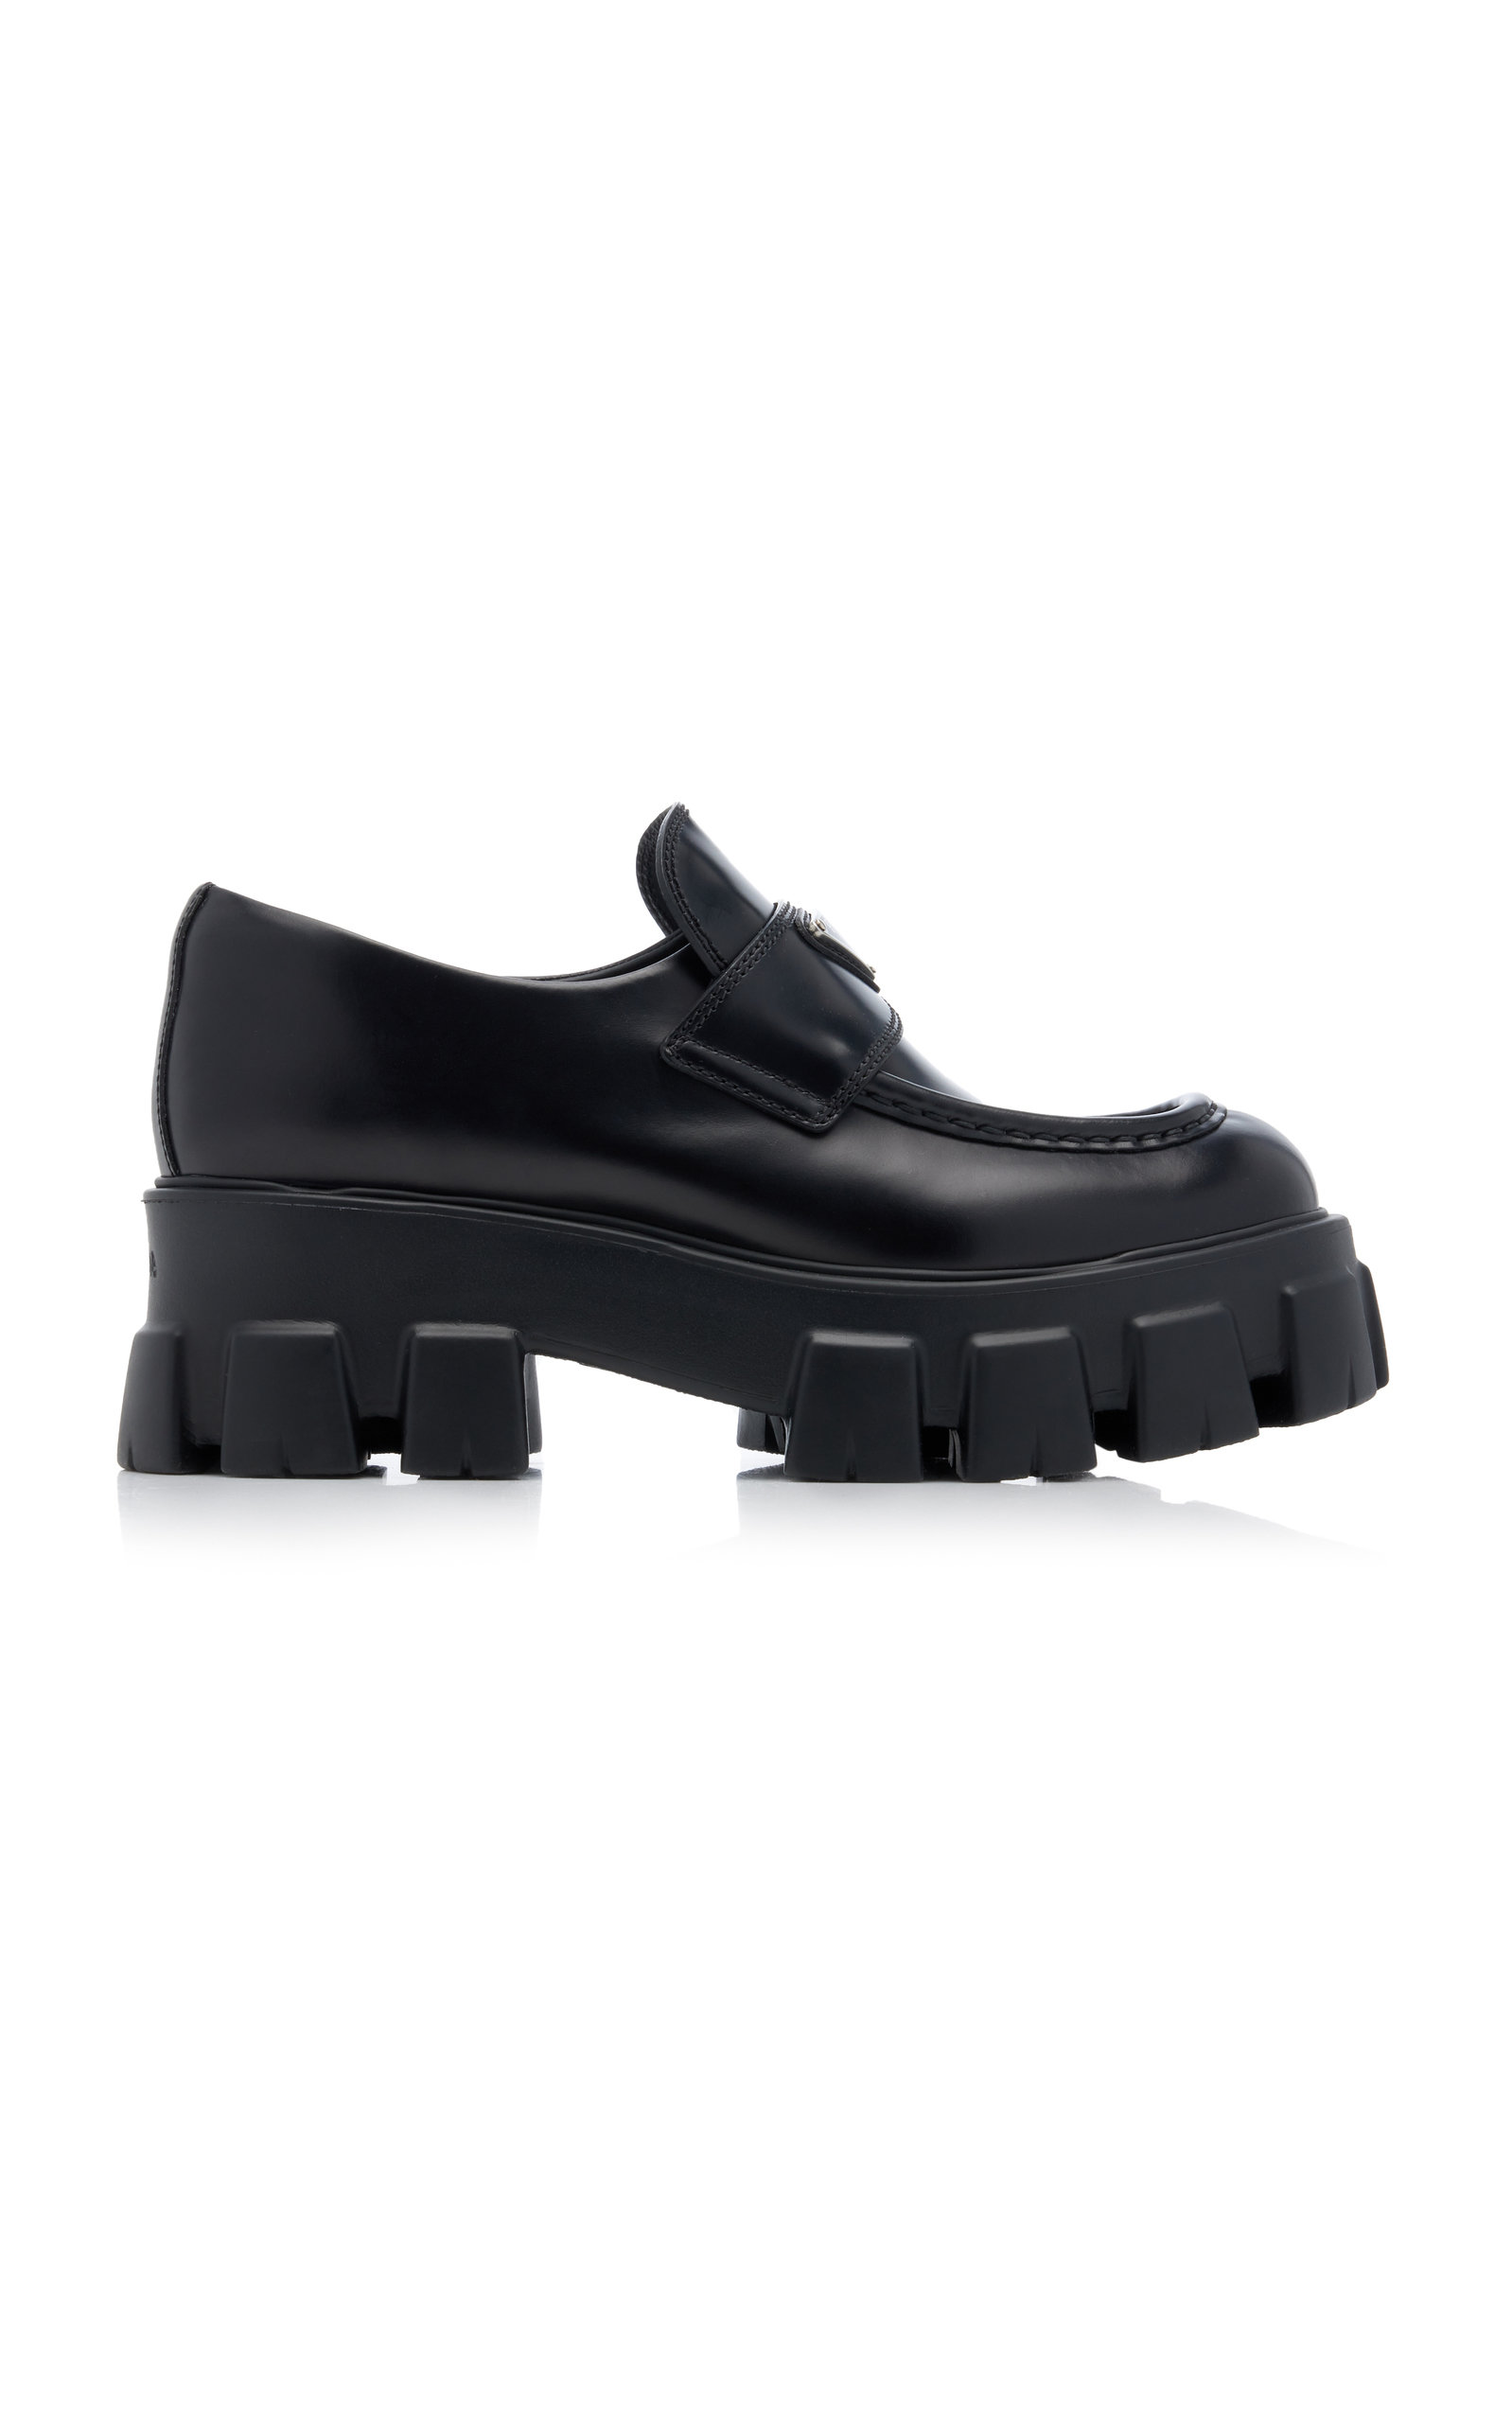 Prada - Women's Monolith Leather Loafers - Black - IT 36 - Moda Operandi